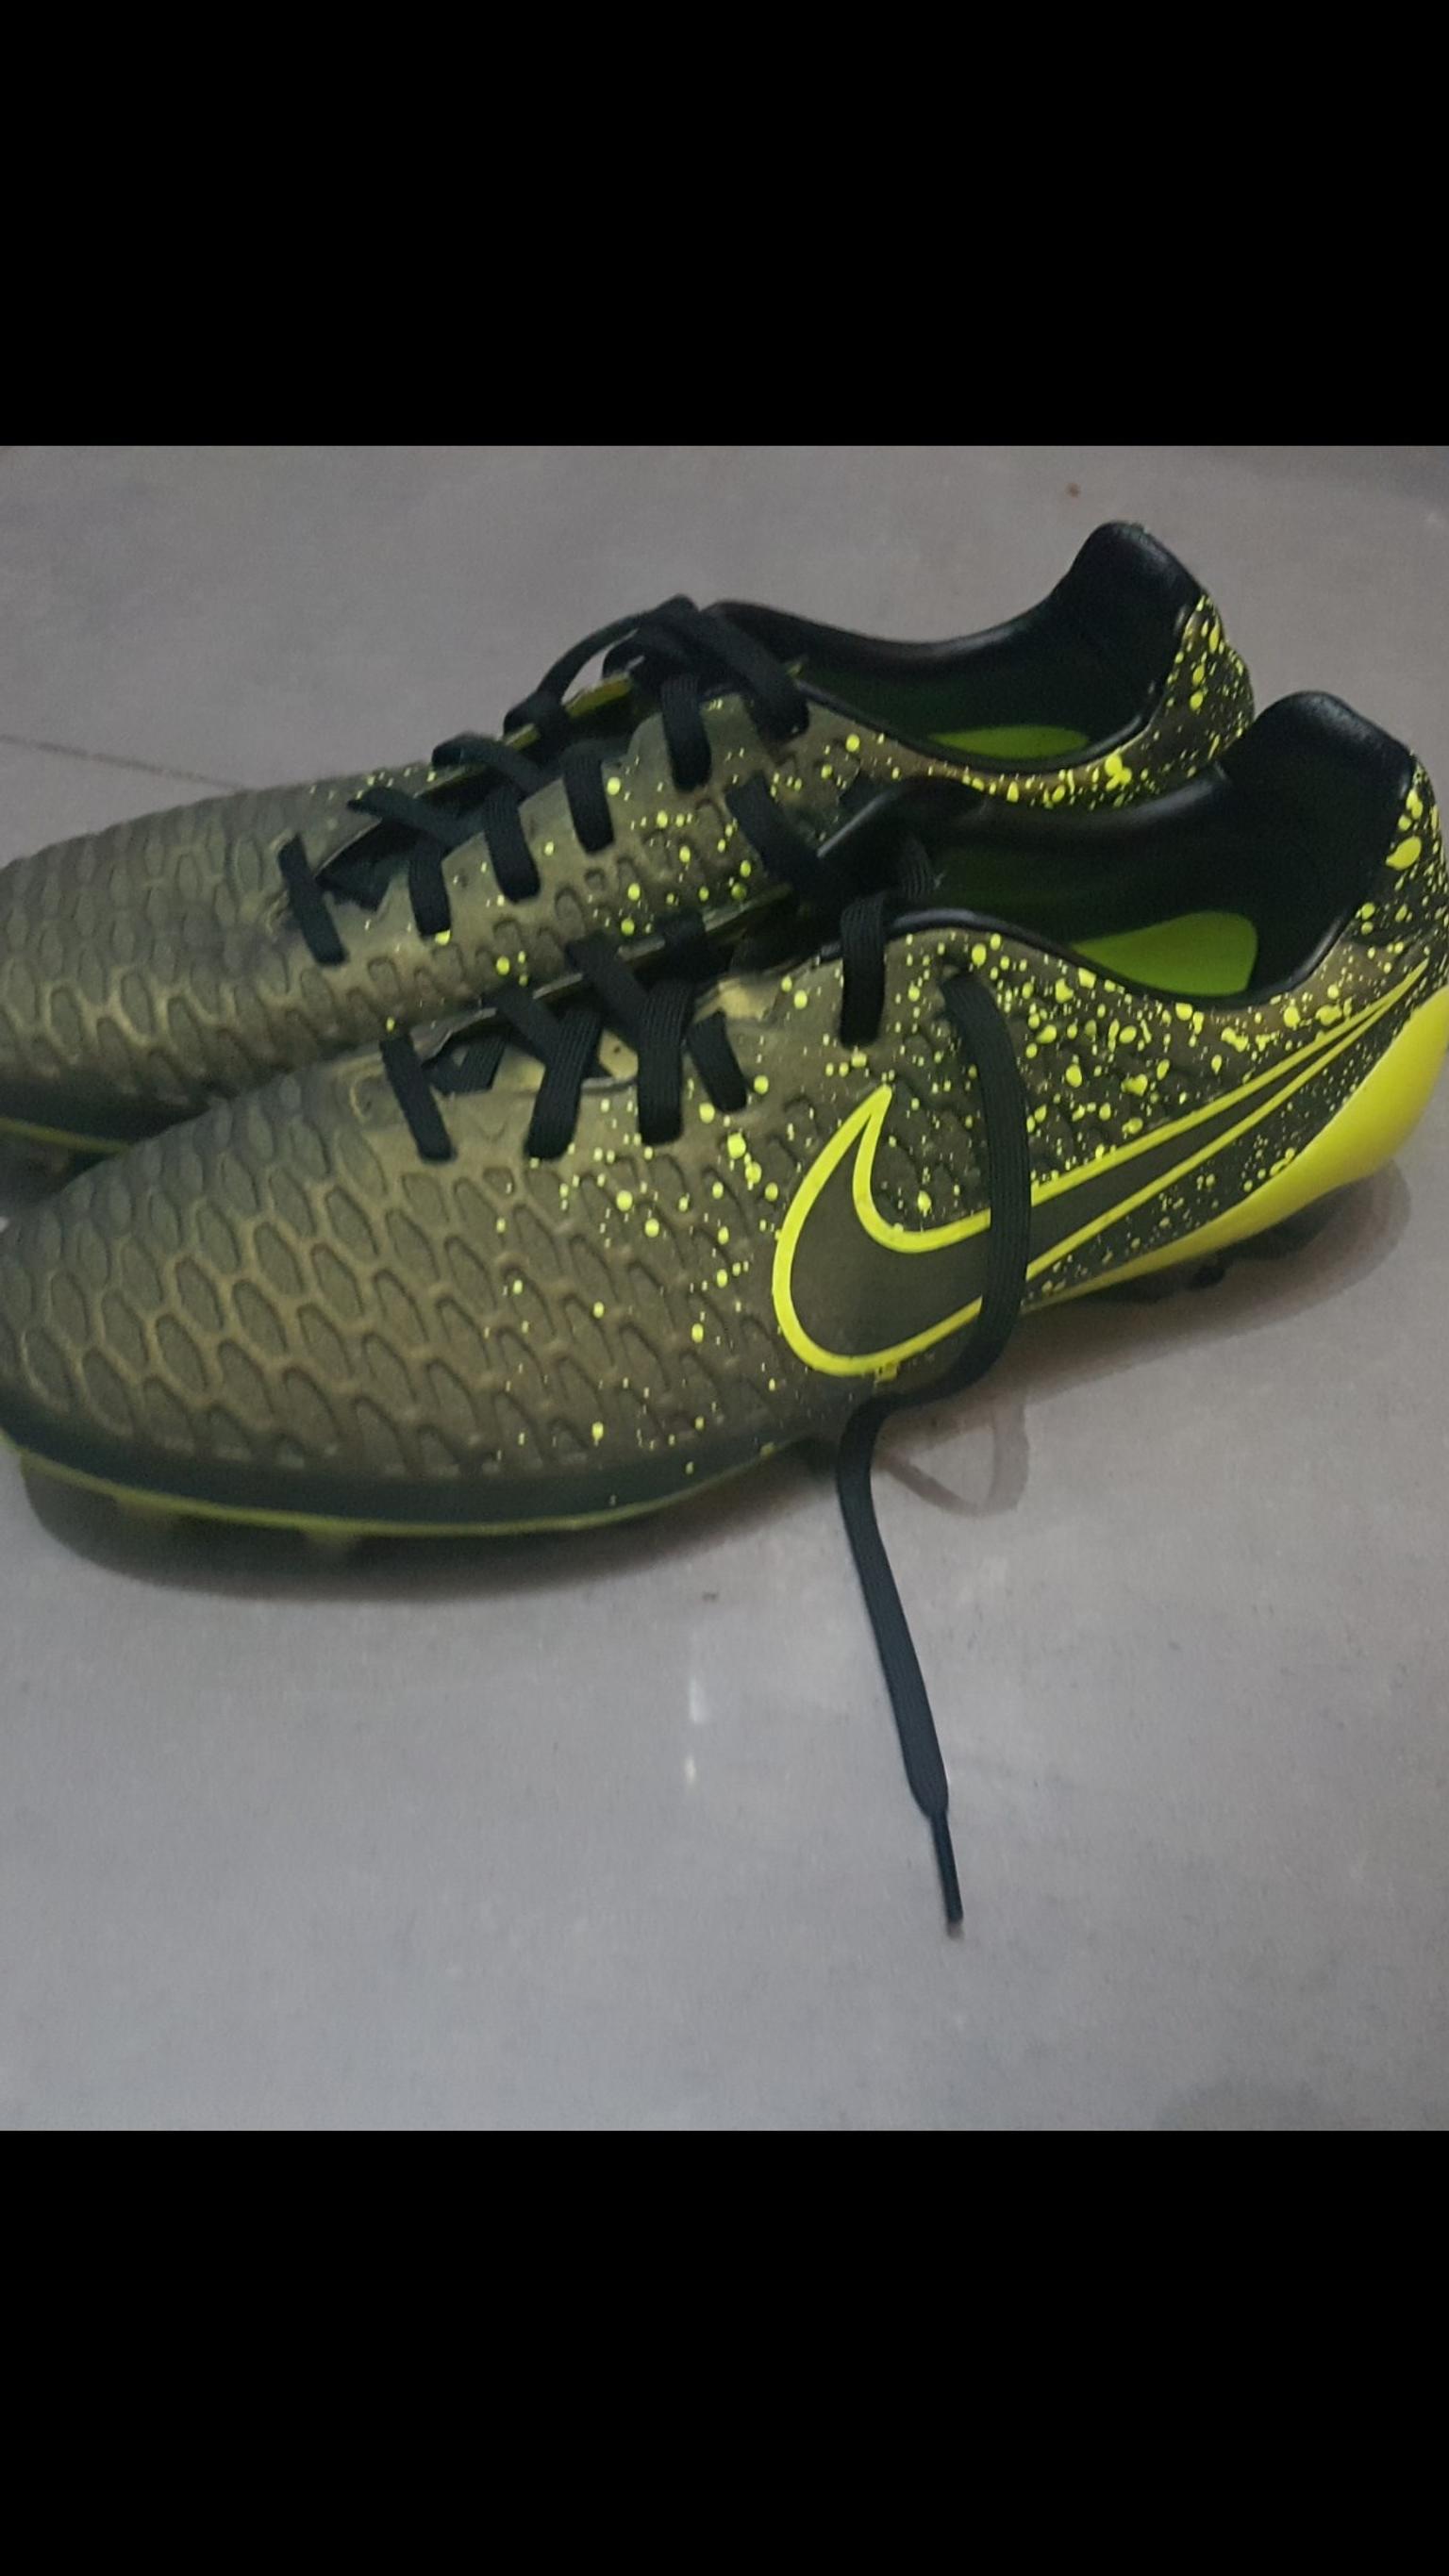 Nike Magista Obra II 2 FG Soccer Cleats Laser Orange Black